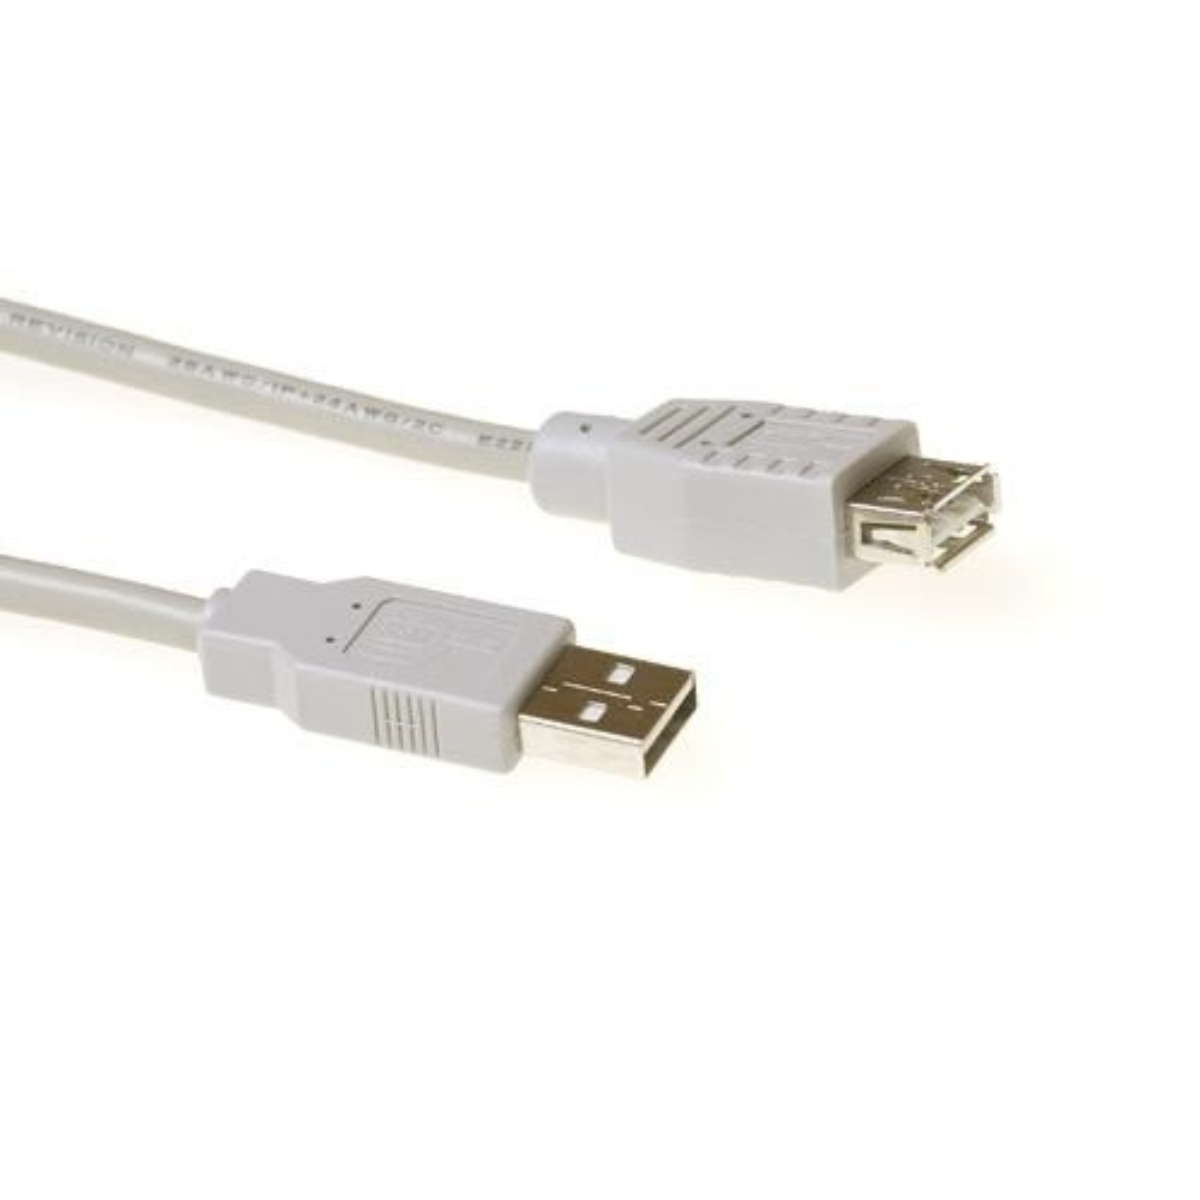 ACT SB2203 USB Kabel